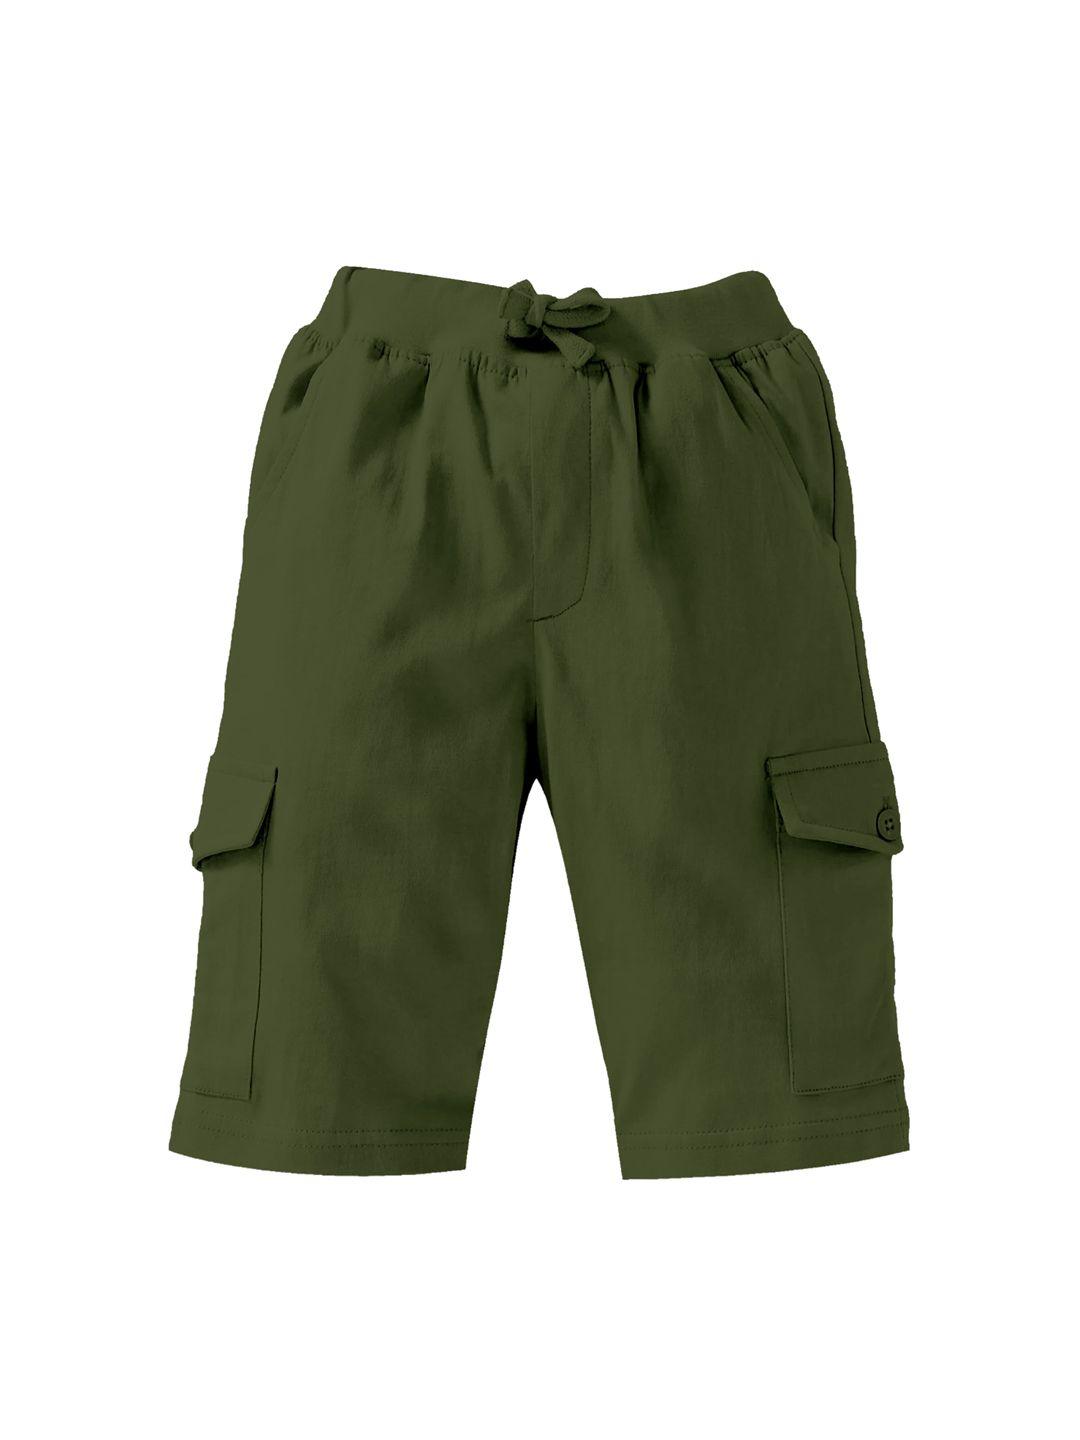 kiddopanti-boys-olive-green-high-rise-cotton-shorts